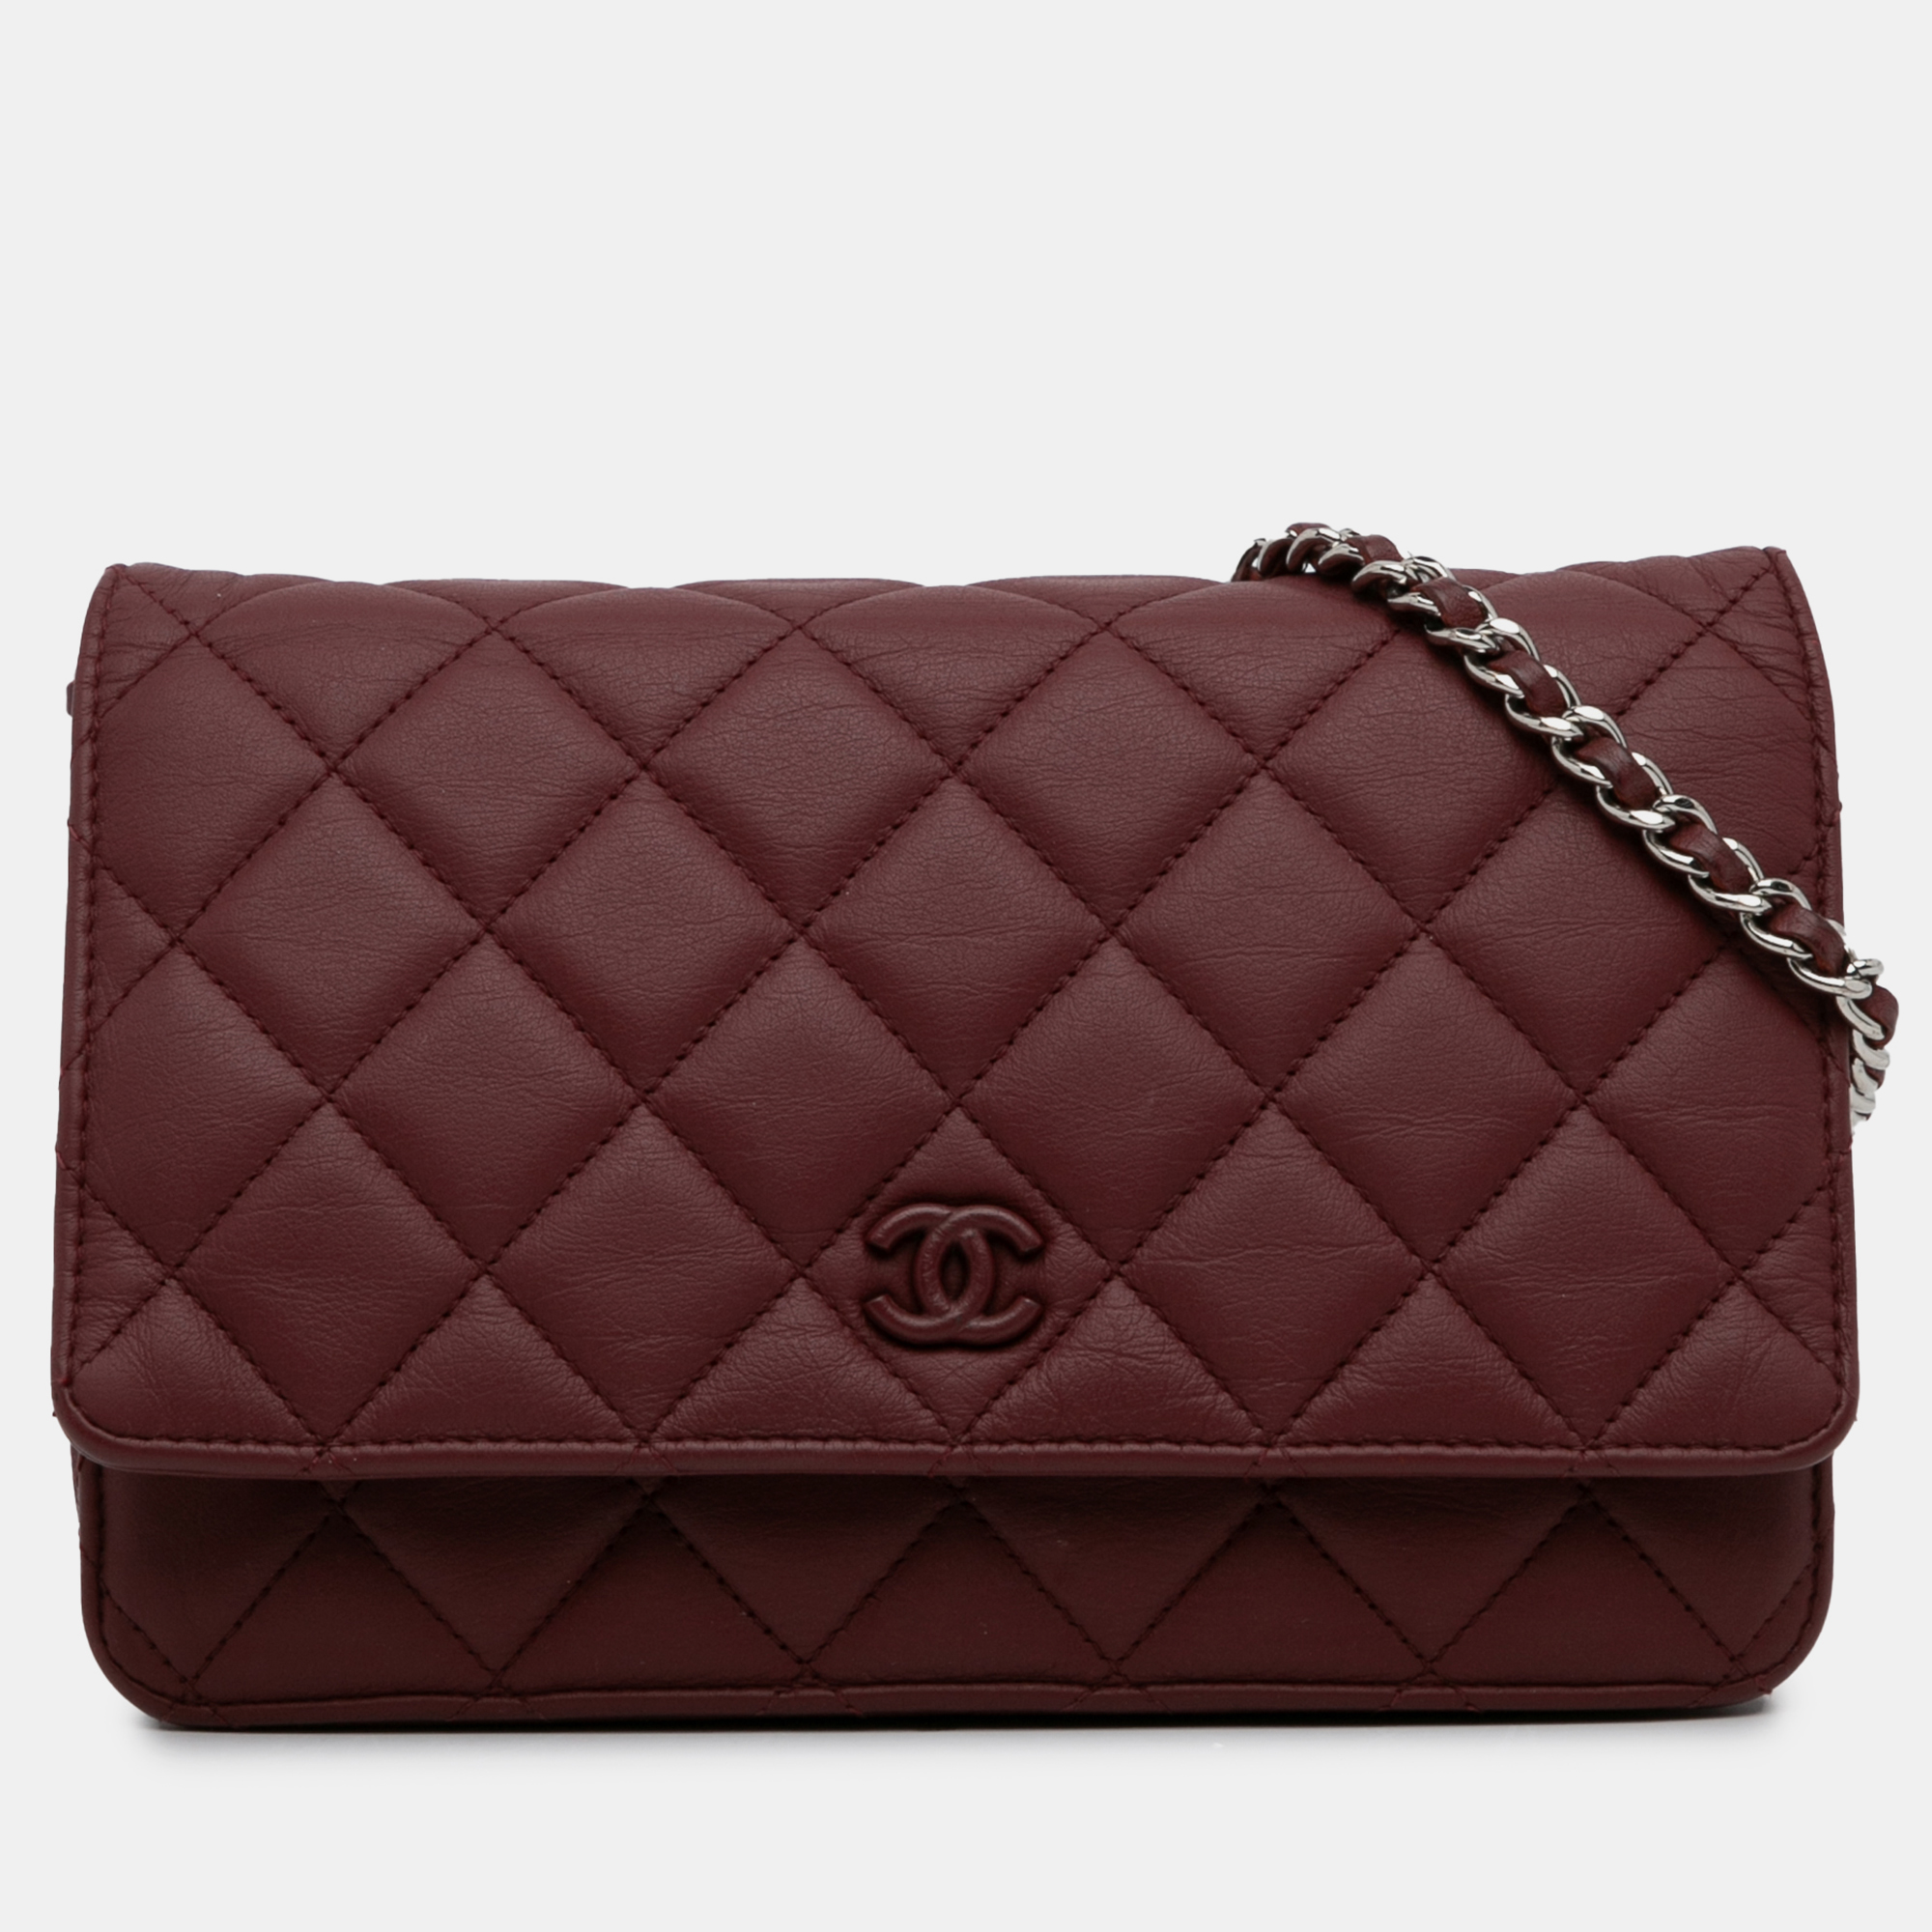 Chanel classic lambskin wallet on chain